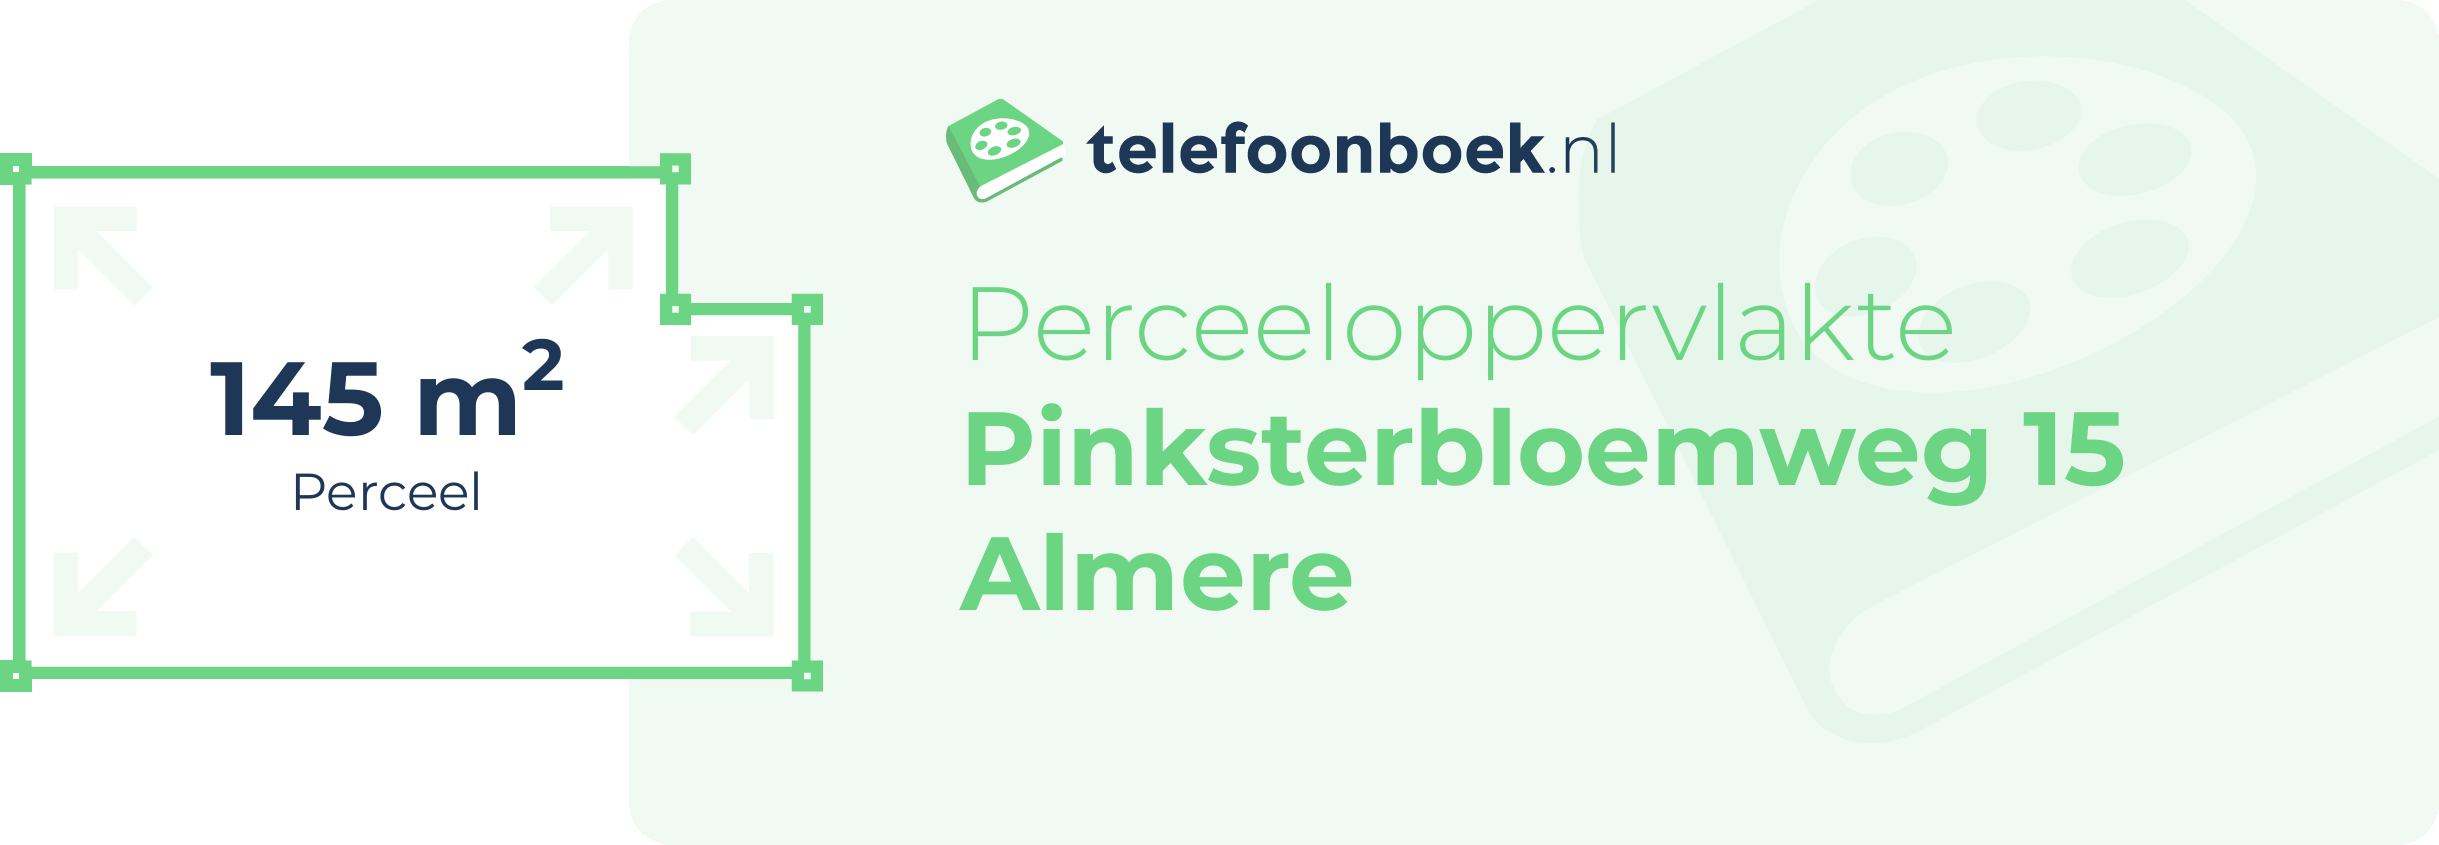 Perceeloppervlakte Pinksterbloemweg 15 Almere